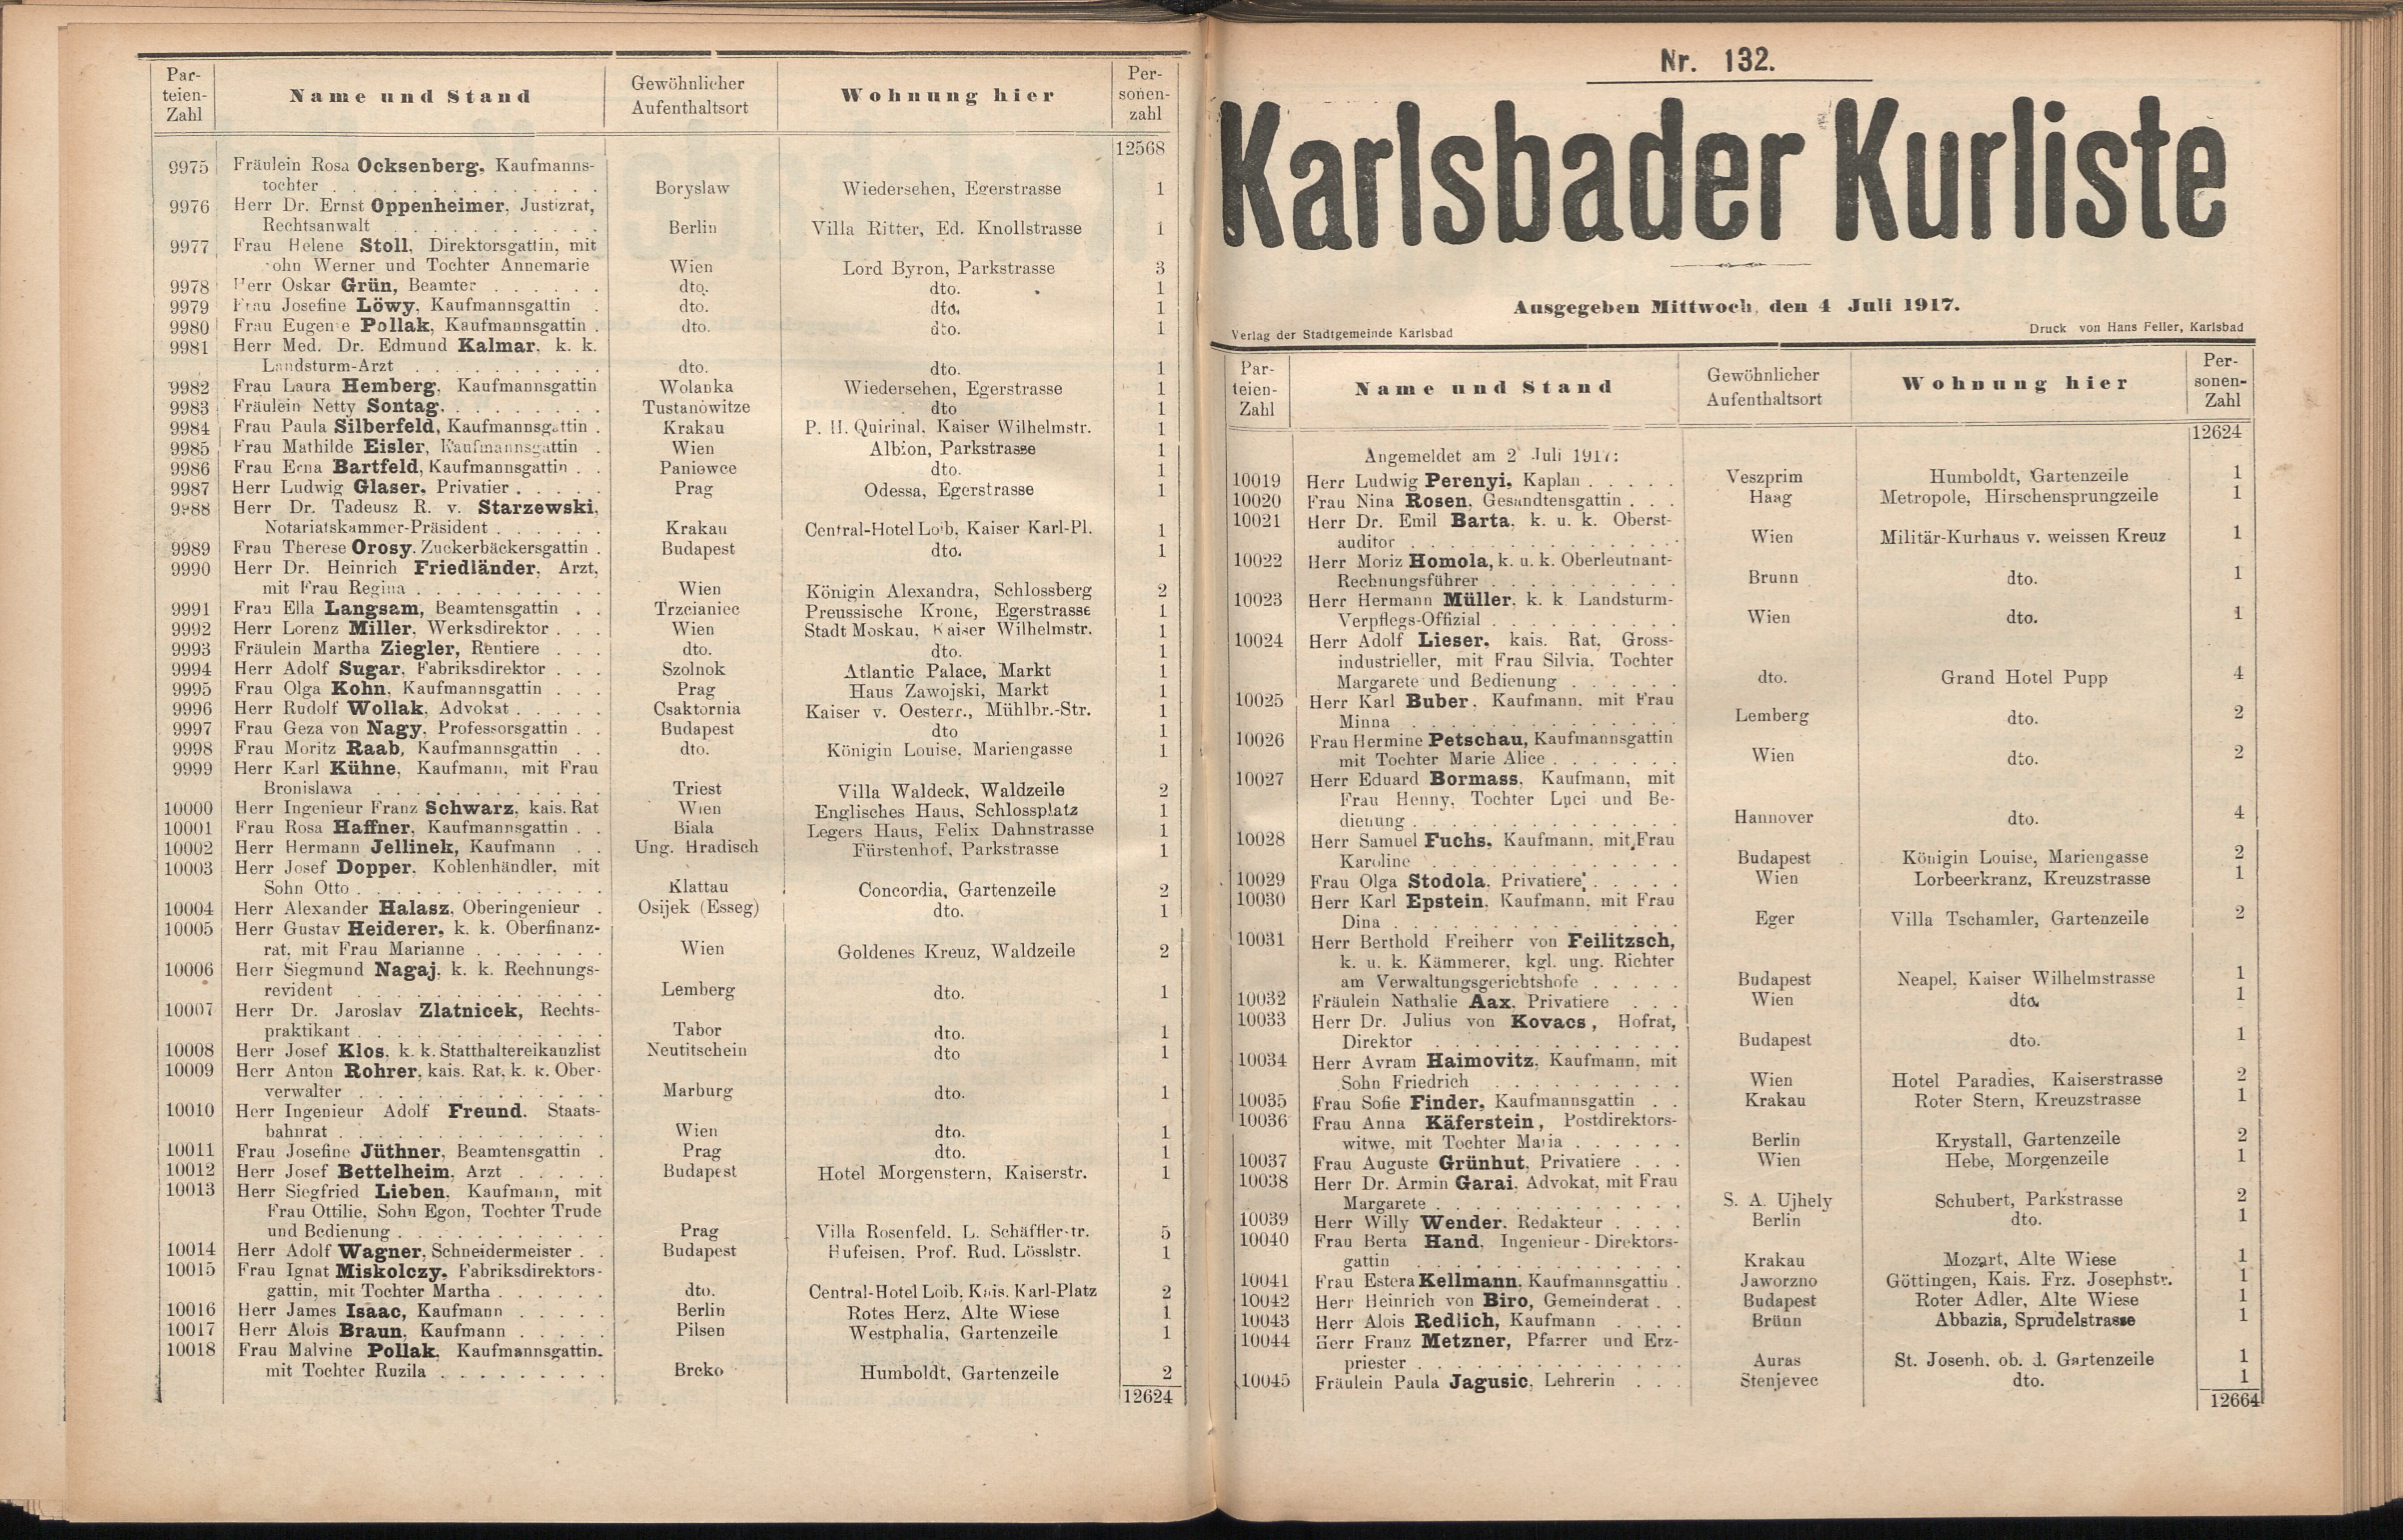 180. soap-kv_knihovna_karlsbader-kurliste-1917_1800